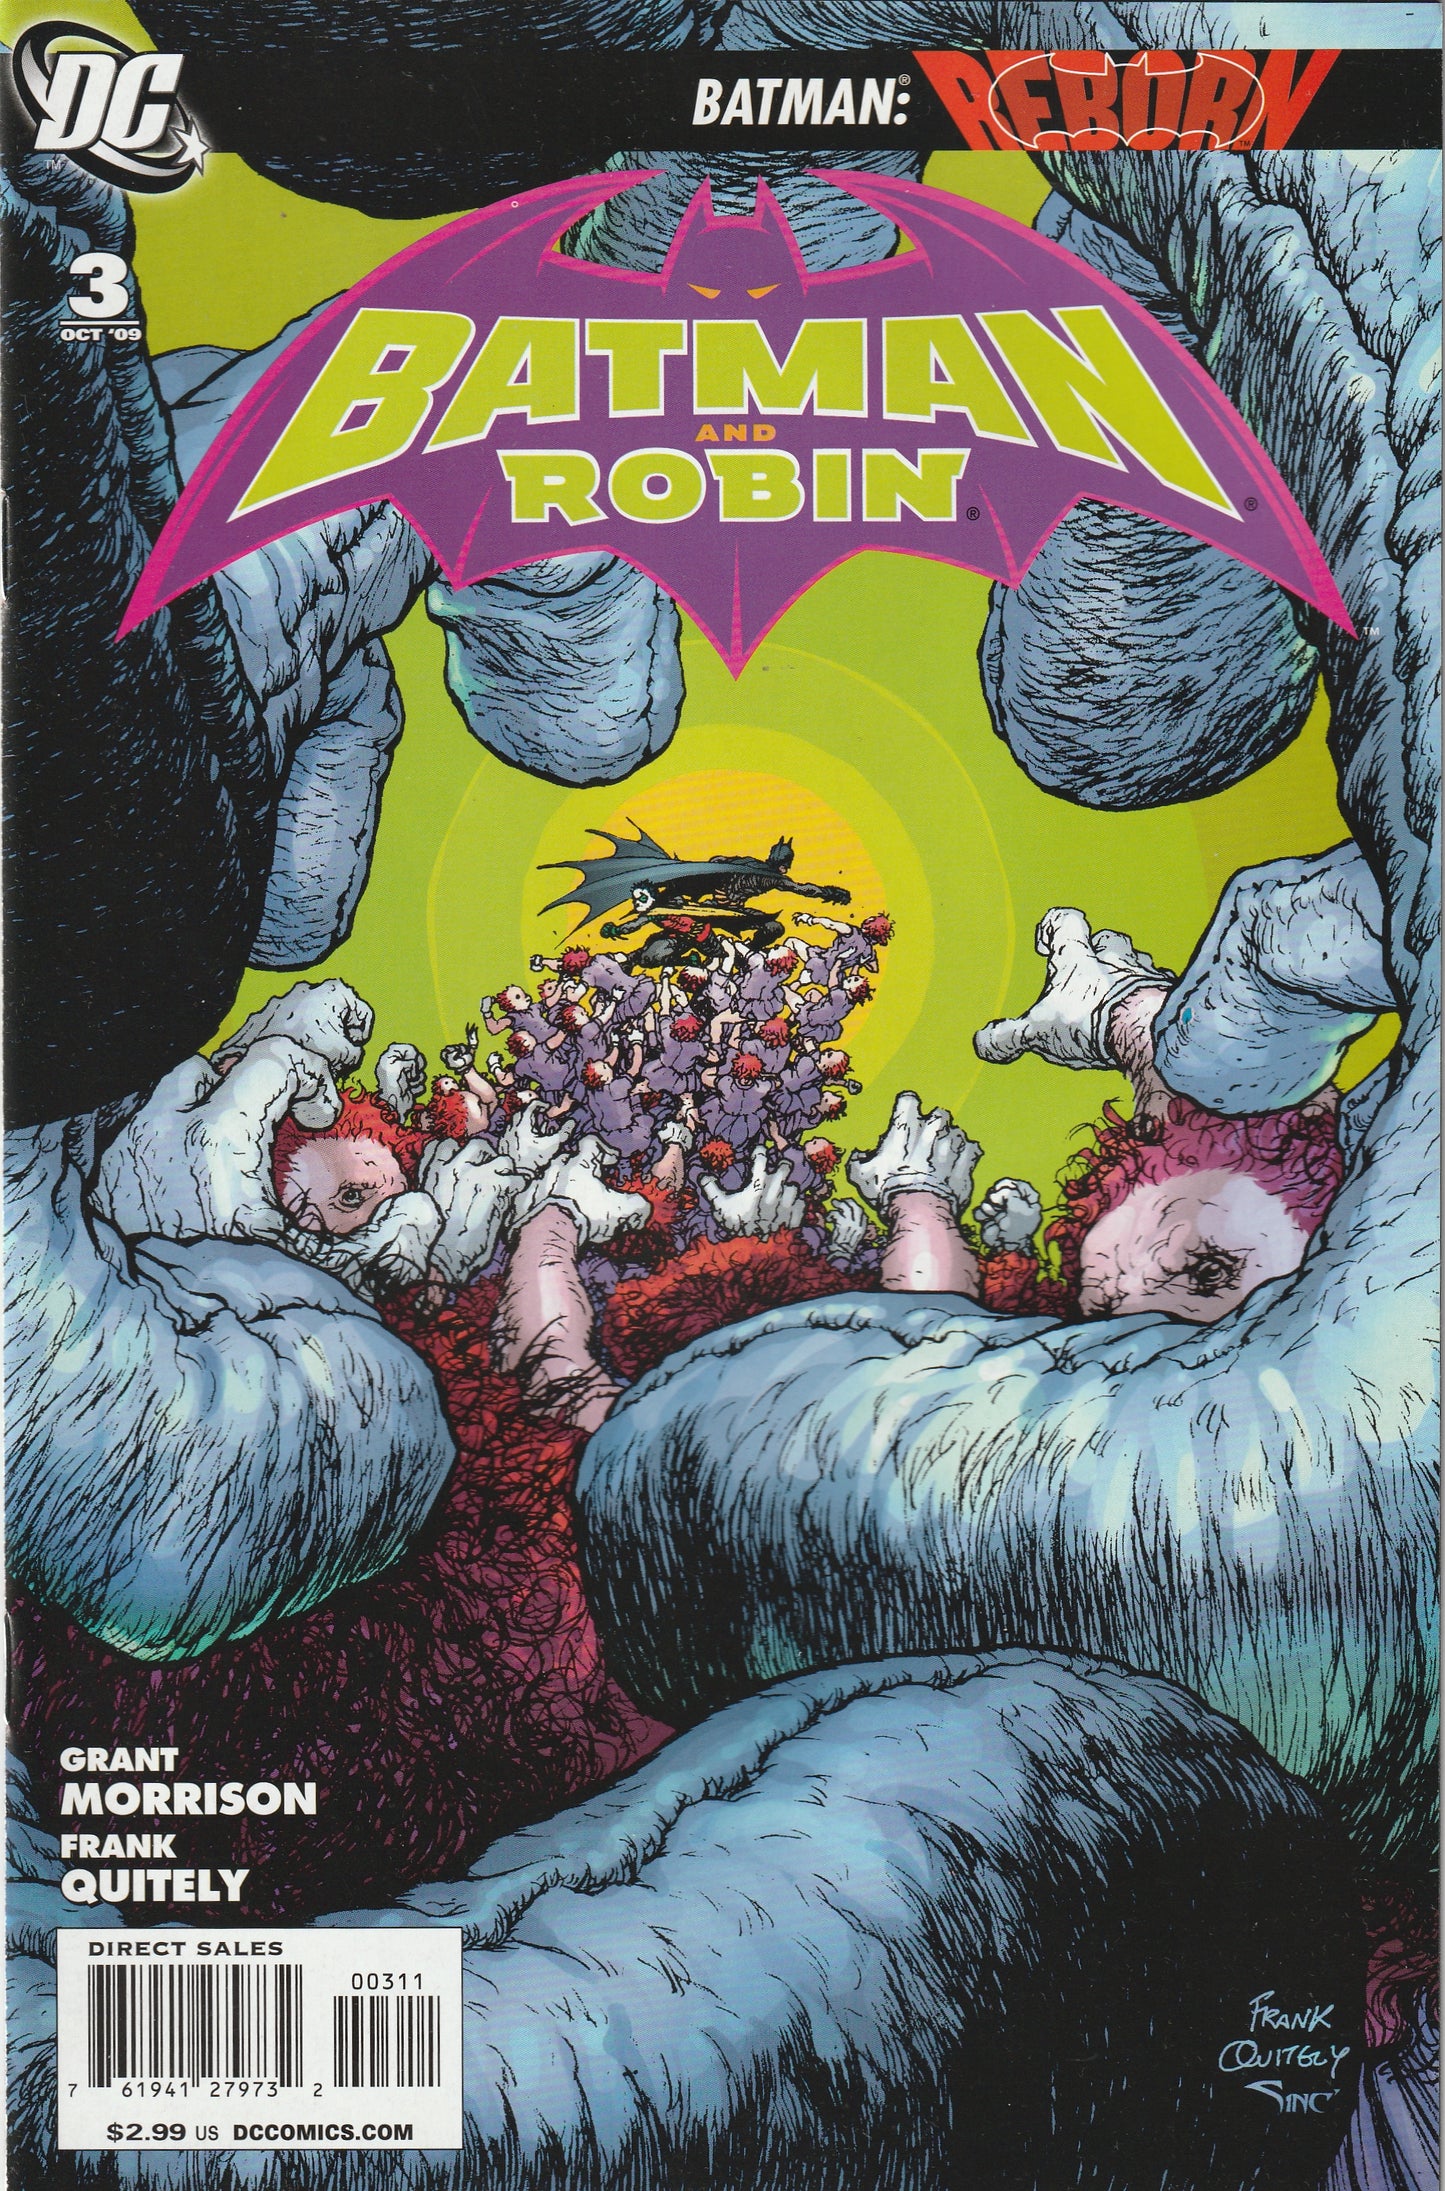 Batman and Robin #3 (2009) - Grant Morrison & Frank Quitely